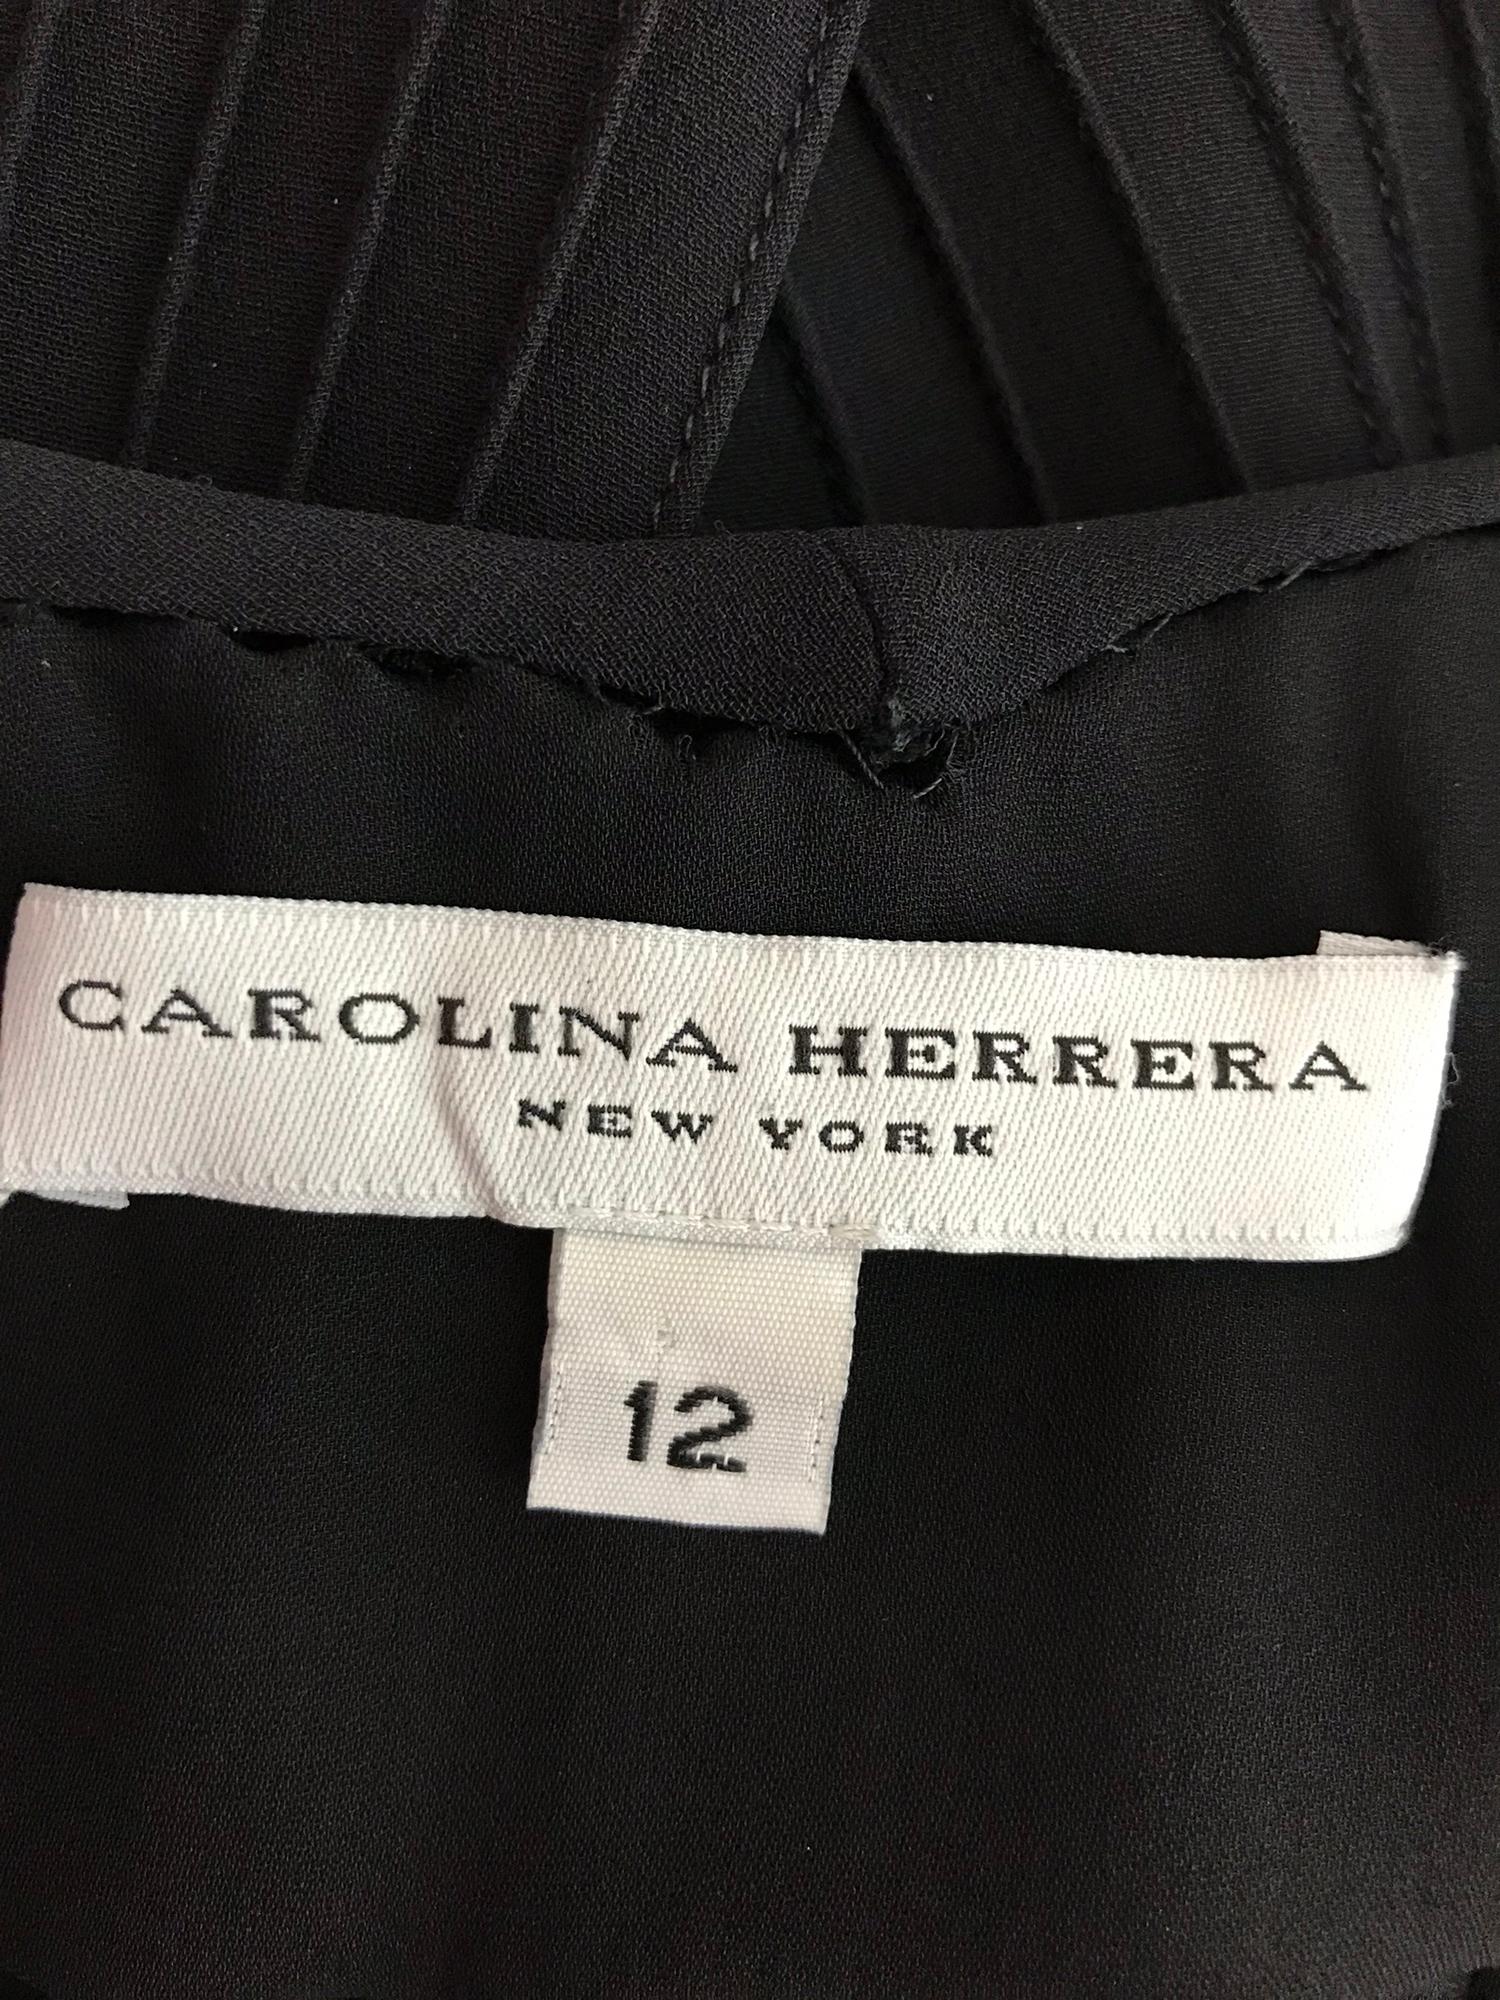 Carolina Herrera Black Beaded Satin Tuxedo Style Evening Dress For Sale ...